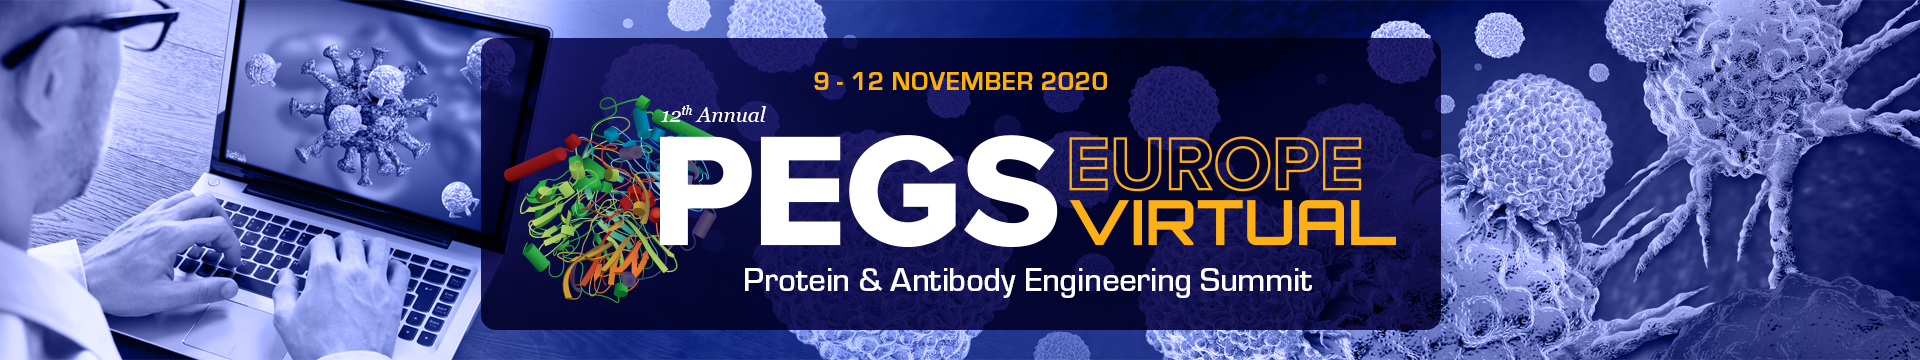 PEGS Europe Protein and Antibody Engineering Summit